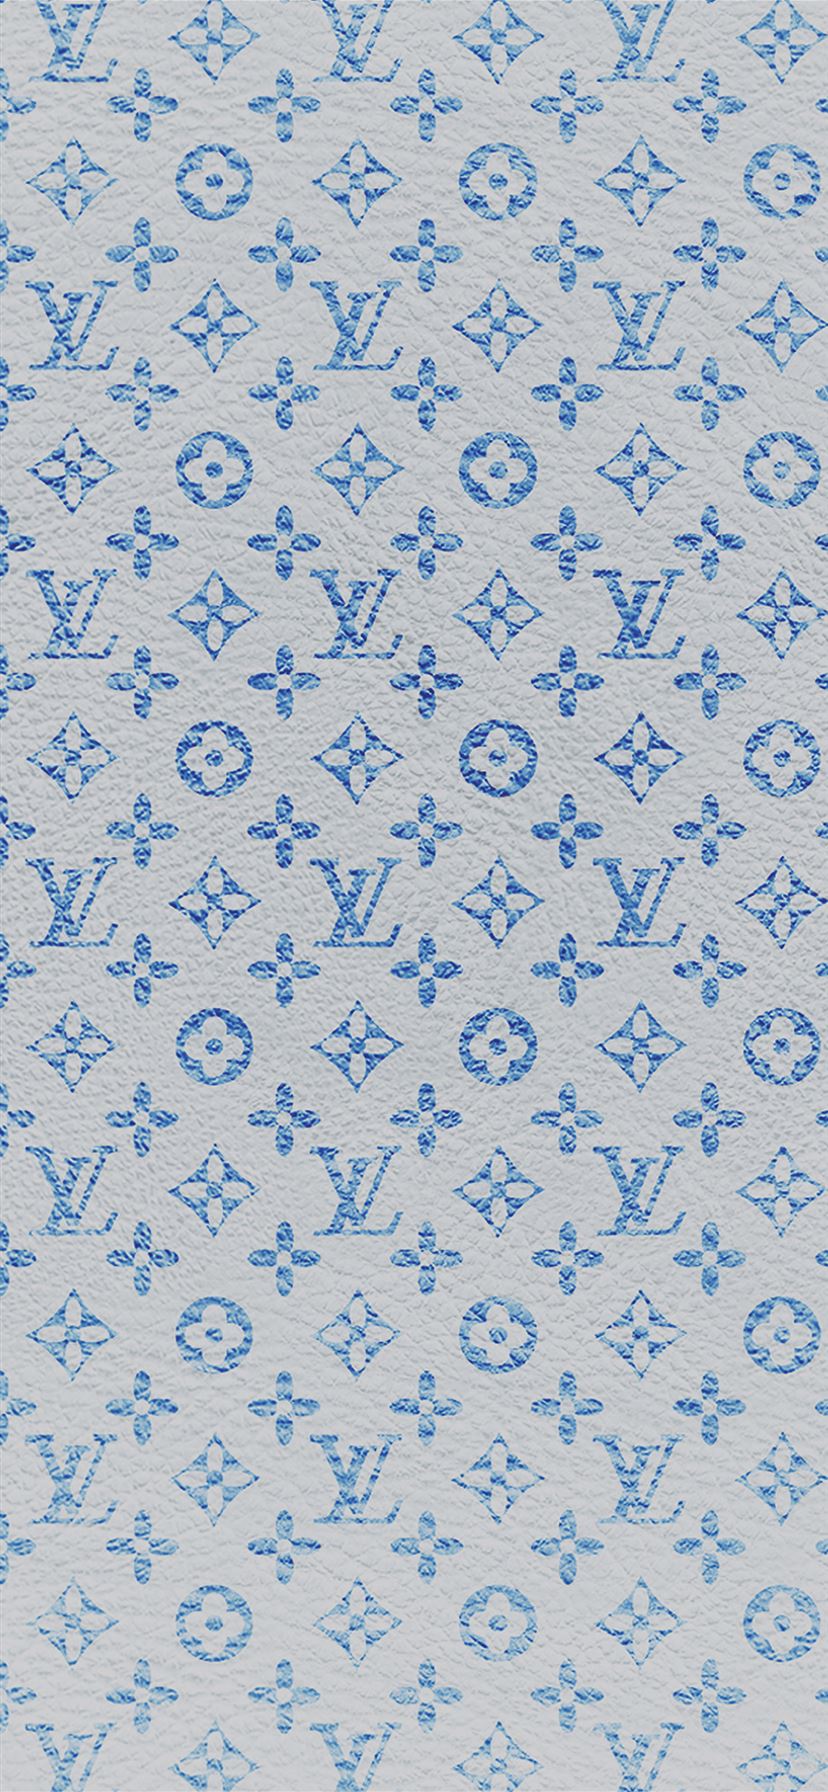 Louis Vuitton blue pattern art iPhone X Wallpaper Free Download